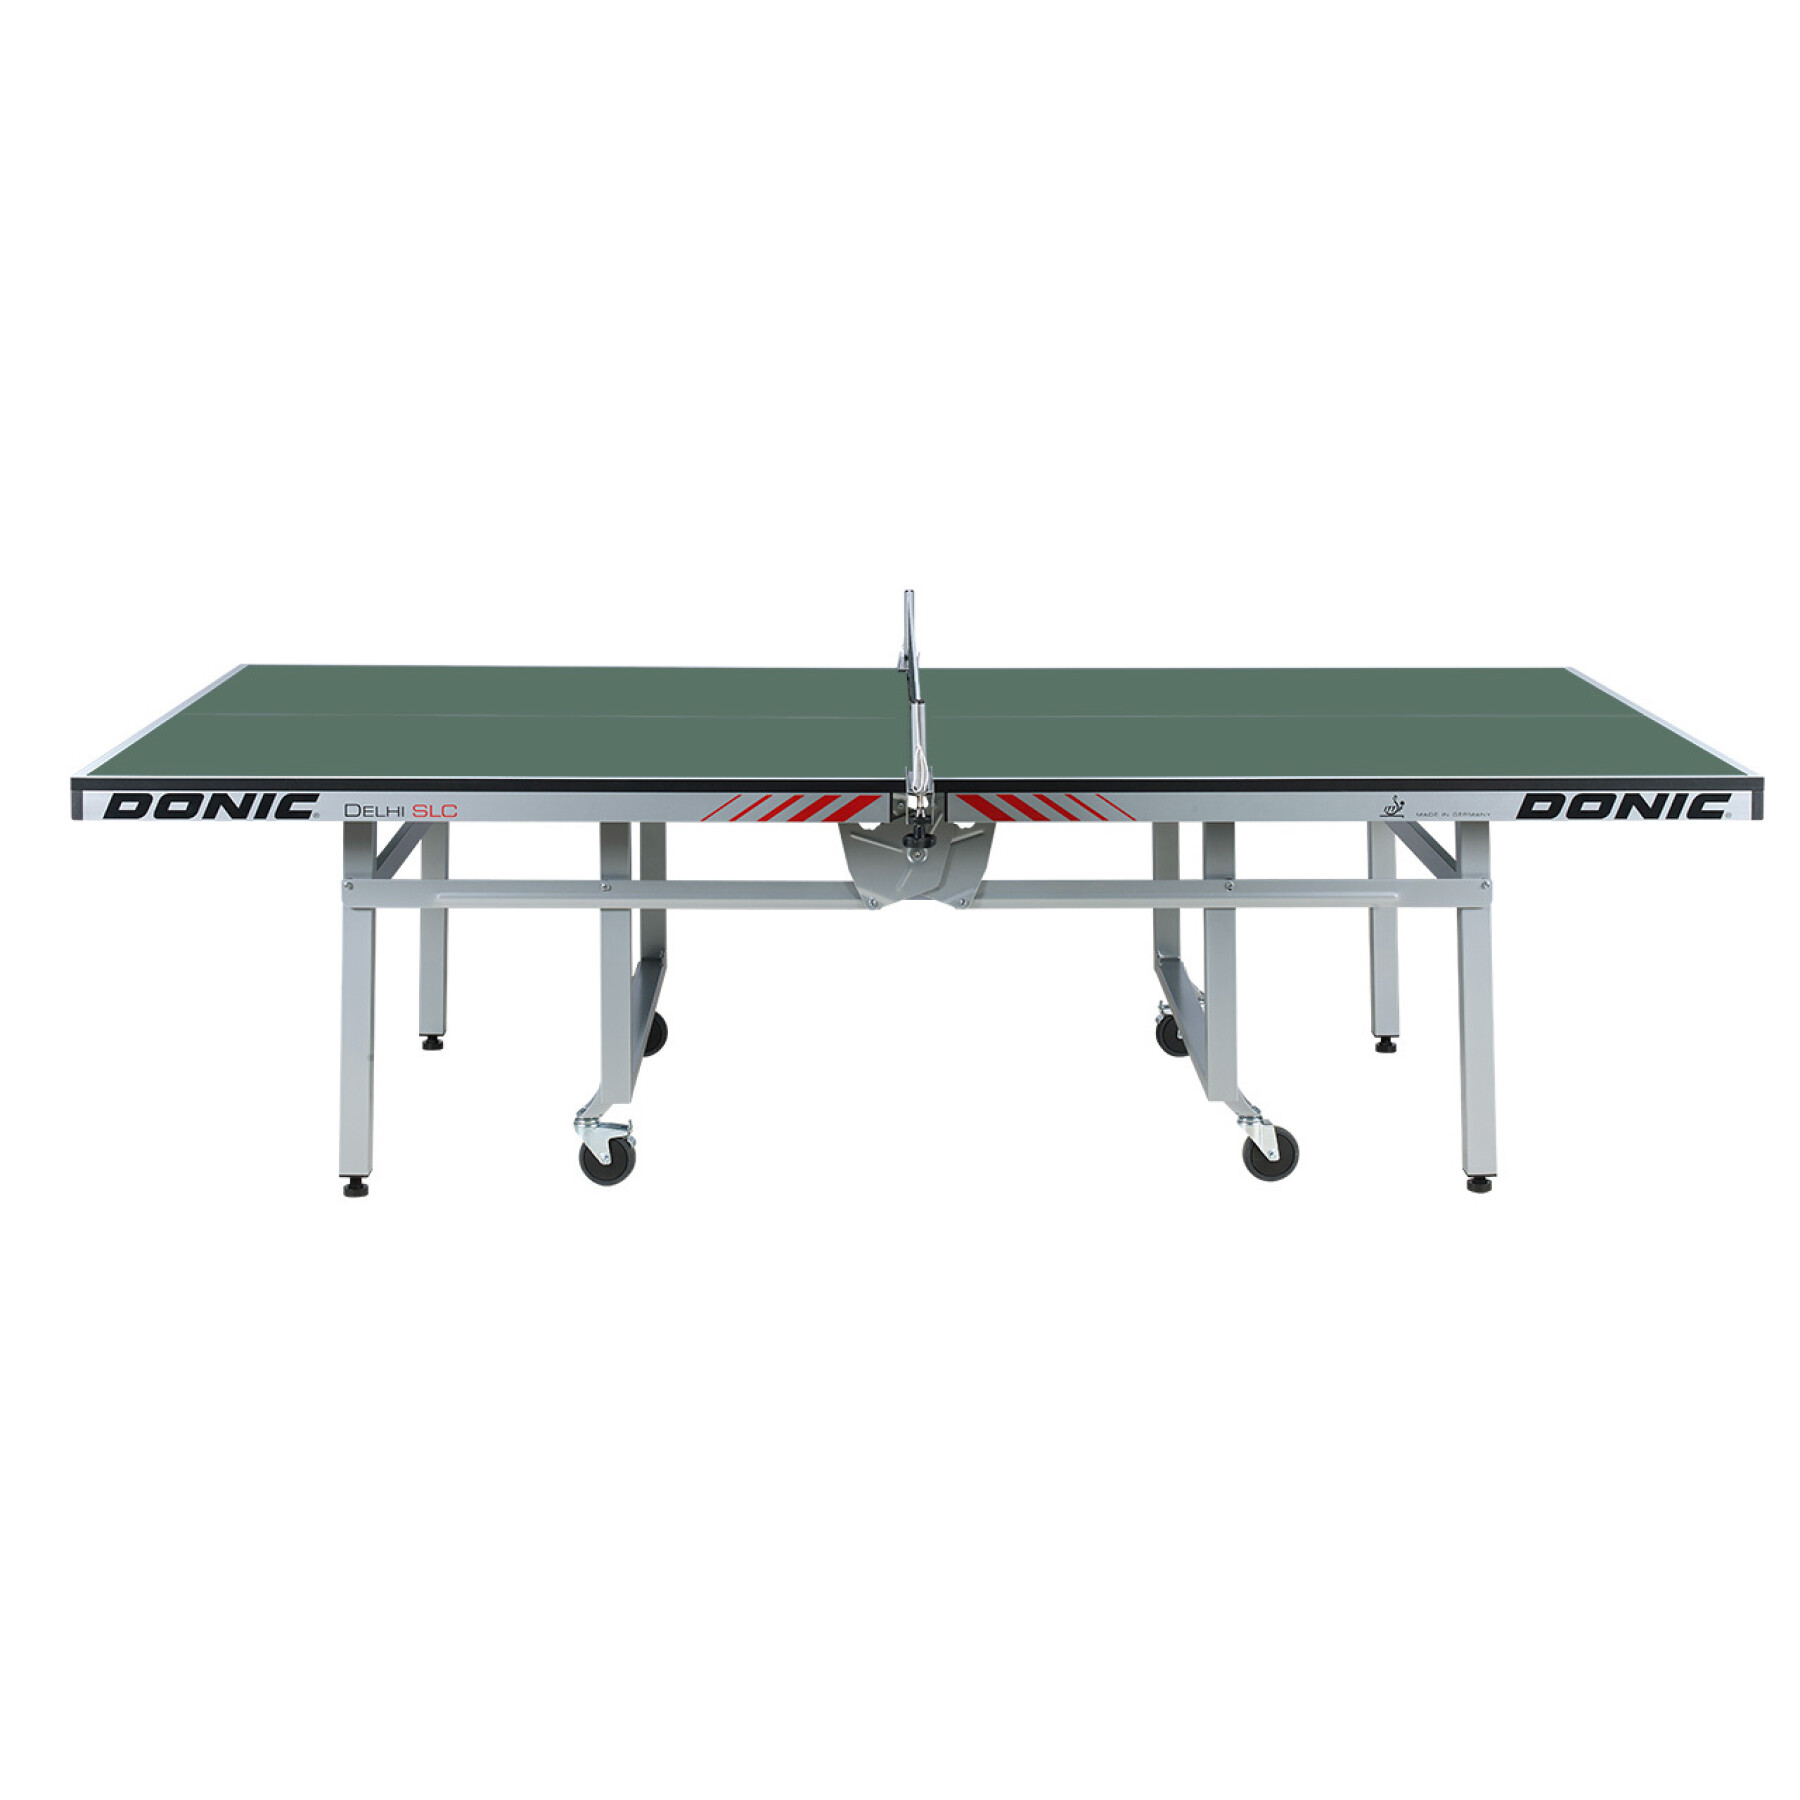 Fully assembled table tennis table Donic Delhi SLC ** ITTF